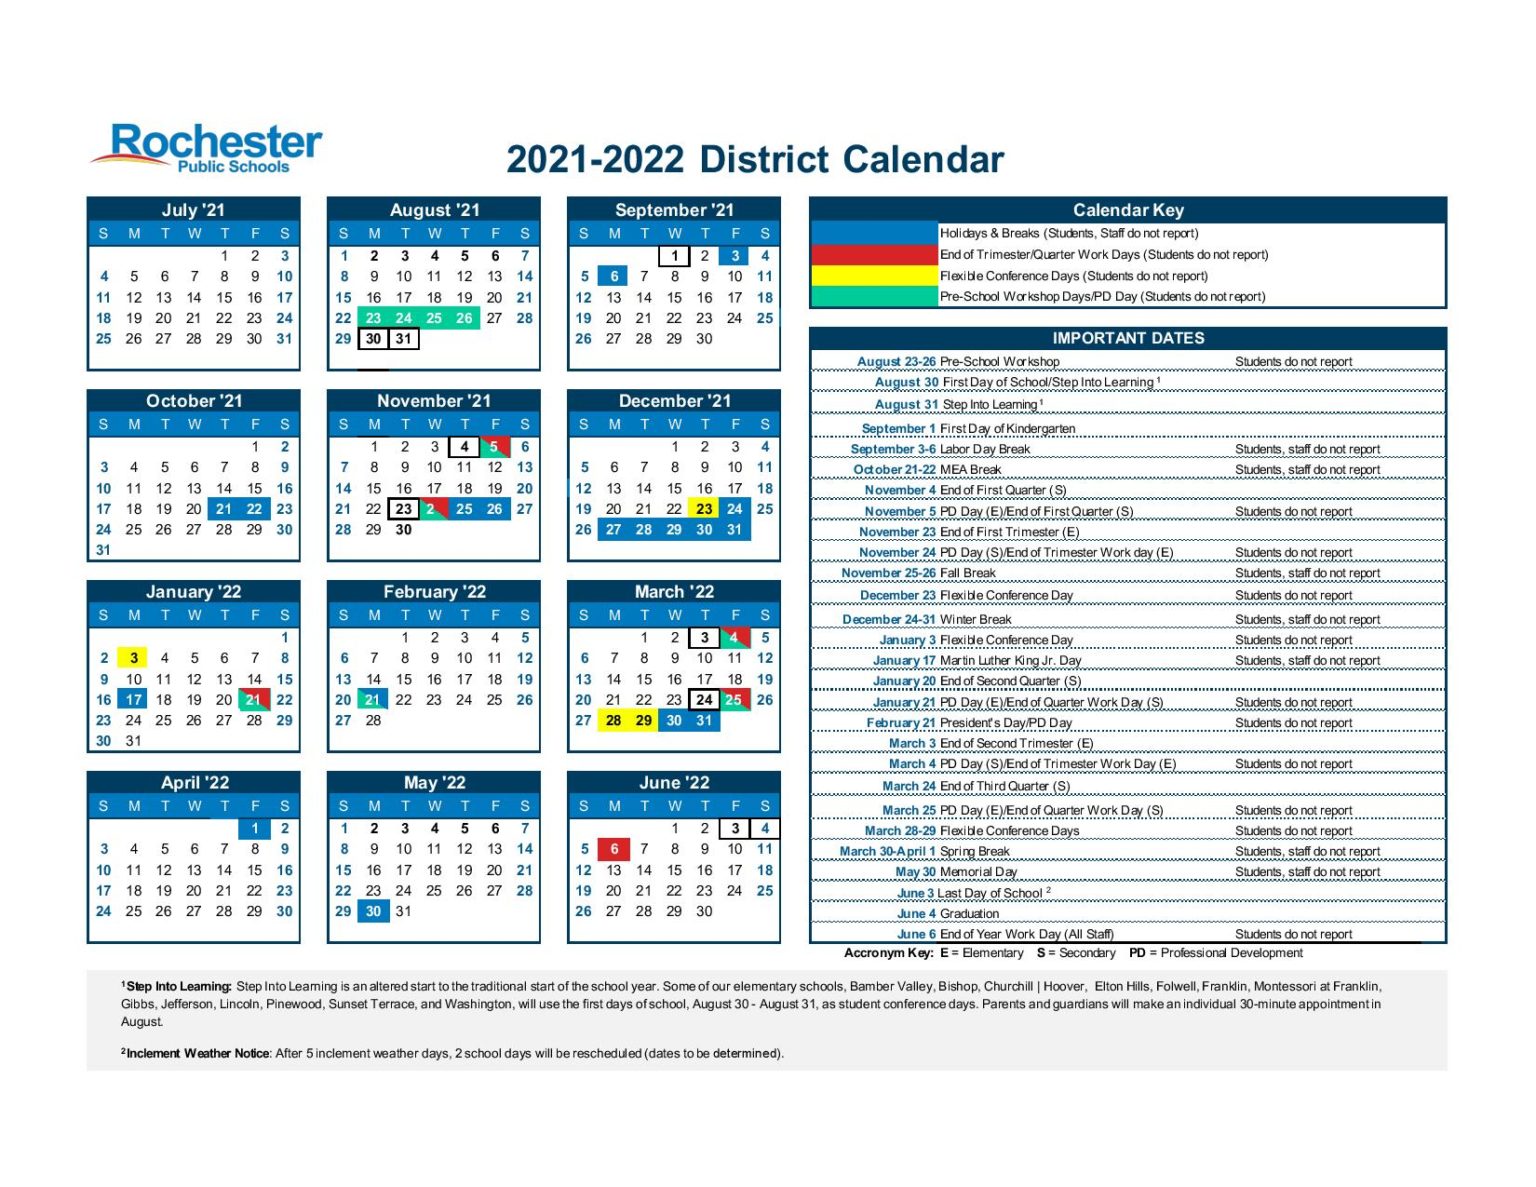 Rochester Public Schools Calendar 20212022 in PDF